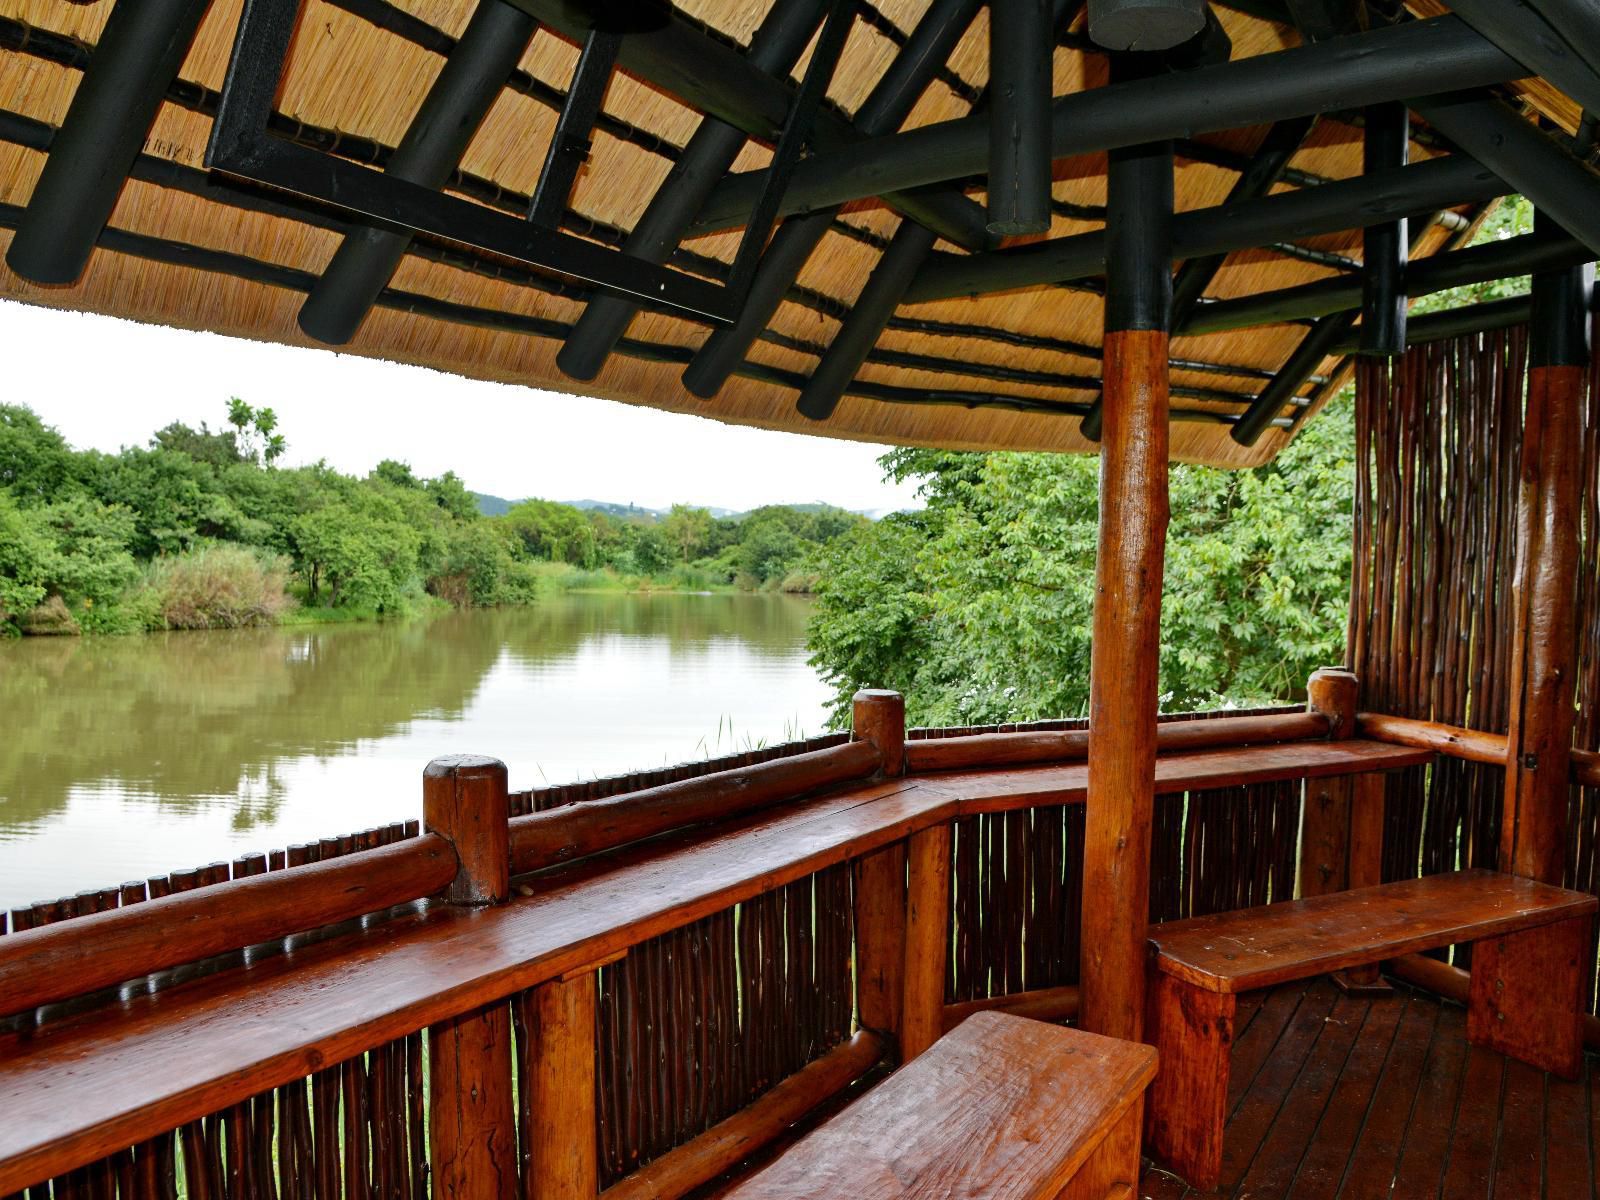 Cambalala Kruger Park Lodge Luxury Self Catering Unit Hazyview Mpumalanga South Africa Boat, Vehicle, Bridge, Architecture, River, Nature, Waters